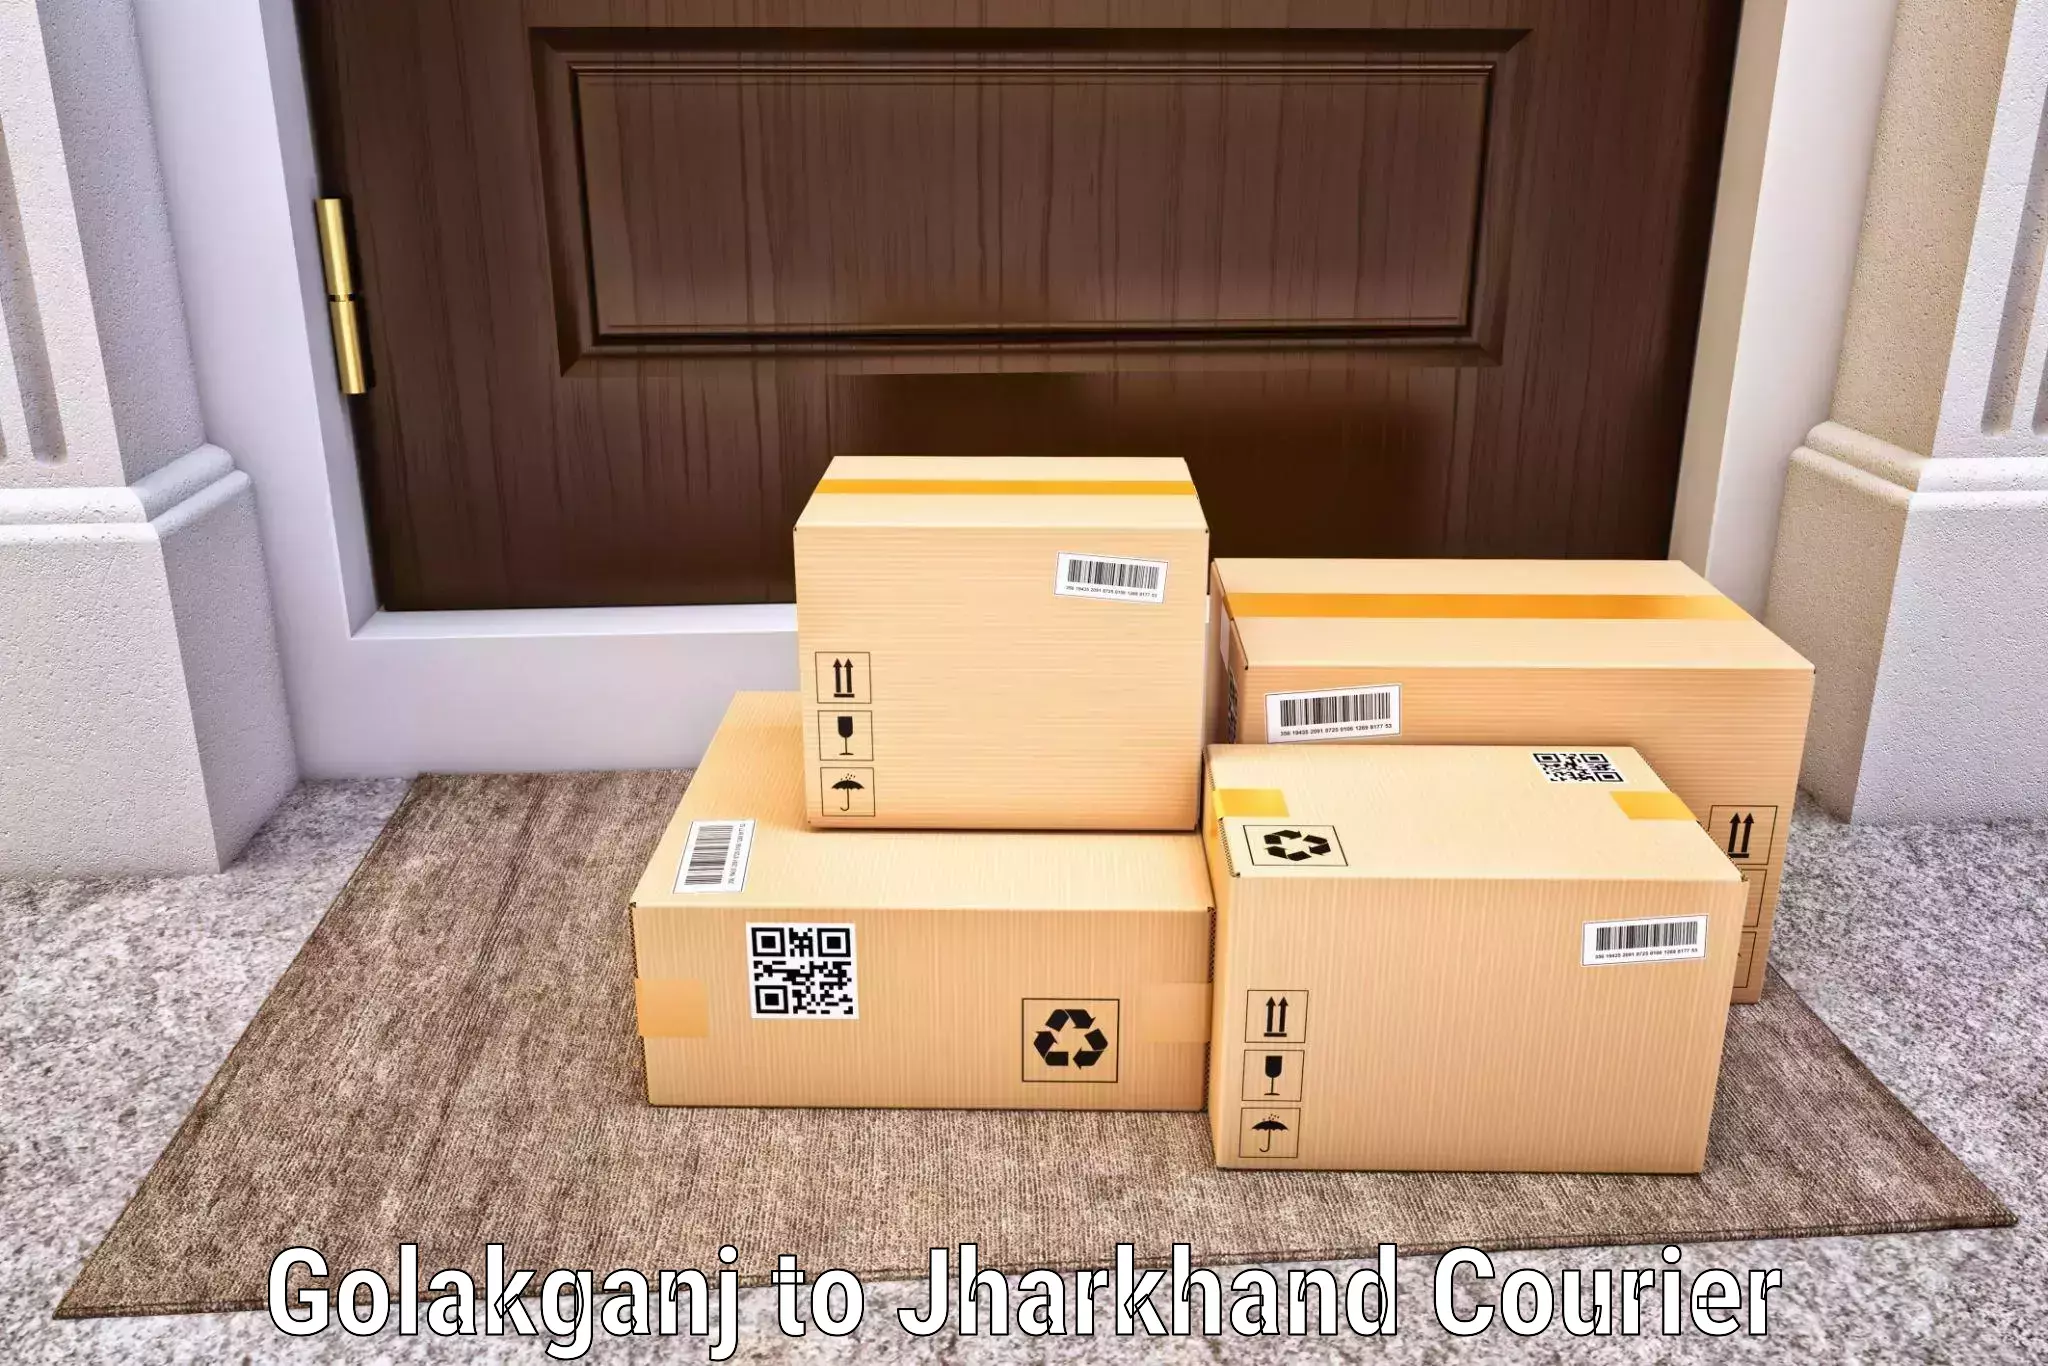 Full-service courier options Golakganj to Bundu